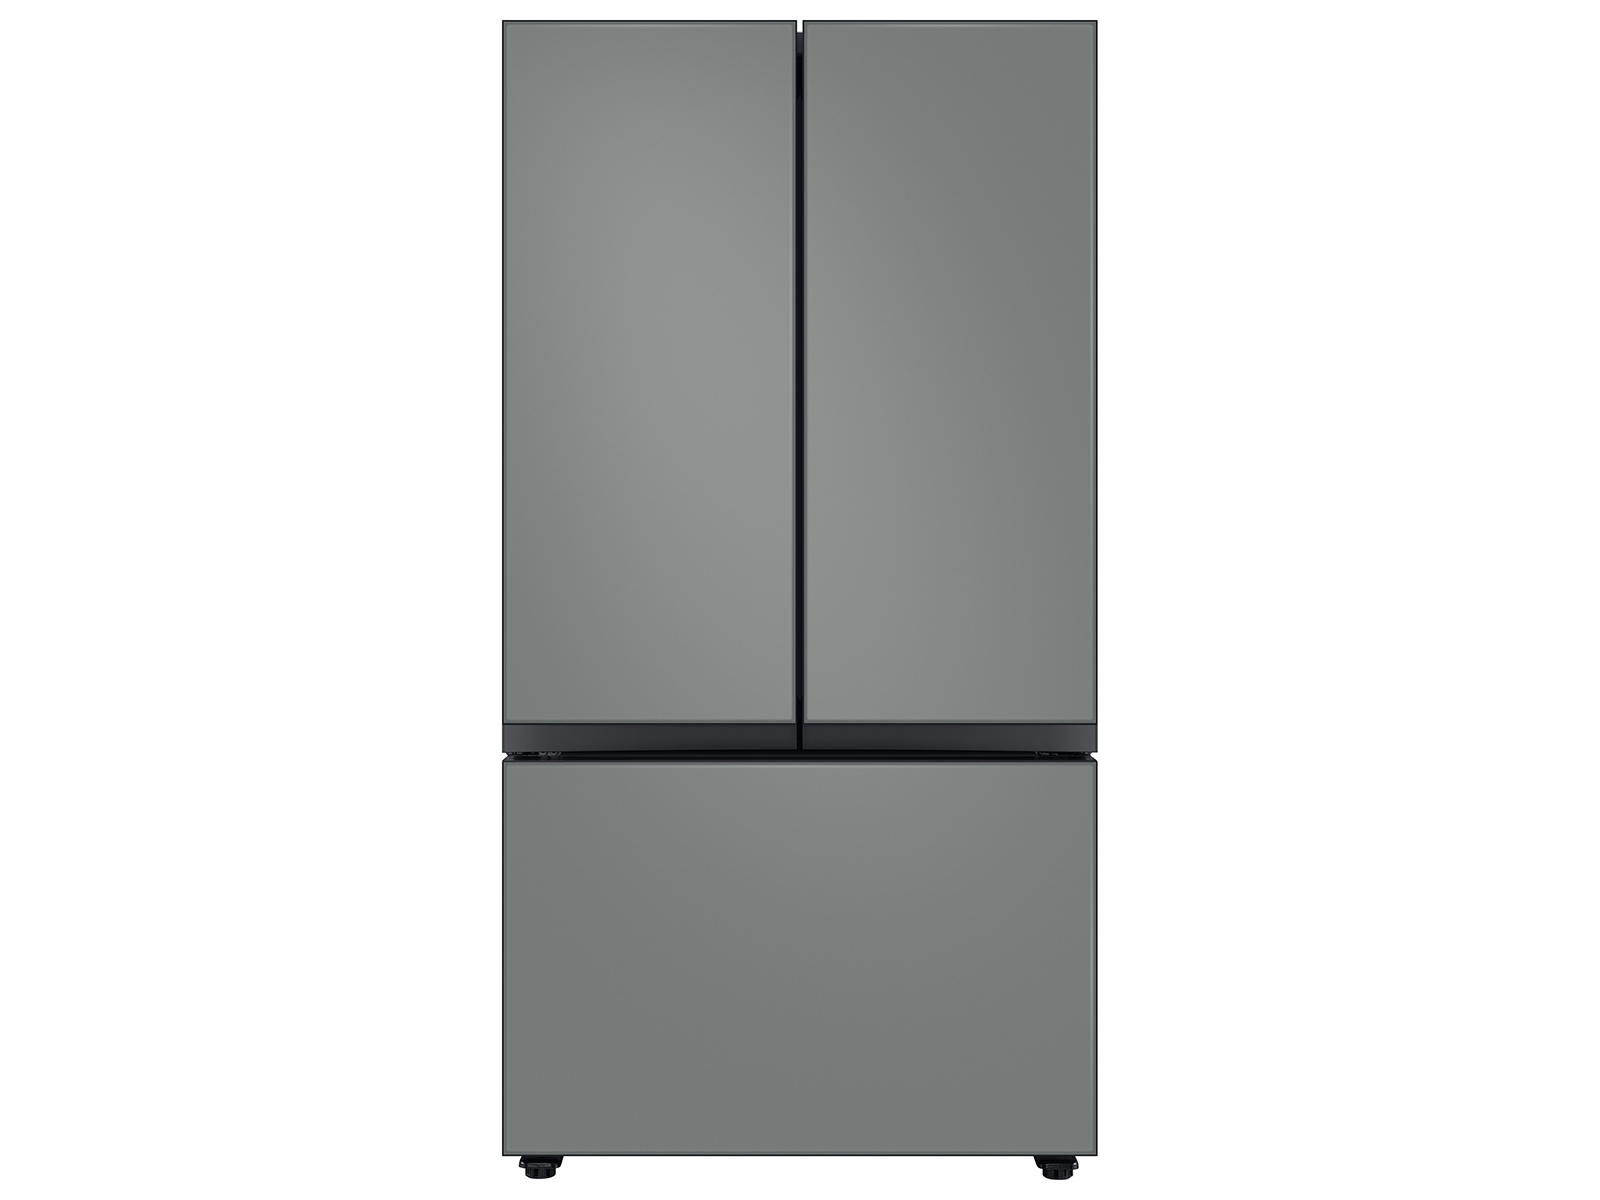 Samsung Bespoke 3-Door French Door Refrigerator in Stainless Steel (30 cu. ft.) with Beverage Center™ in Grey Glass(BNDL-1650311953417)